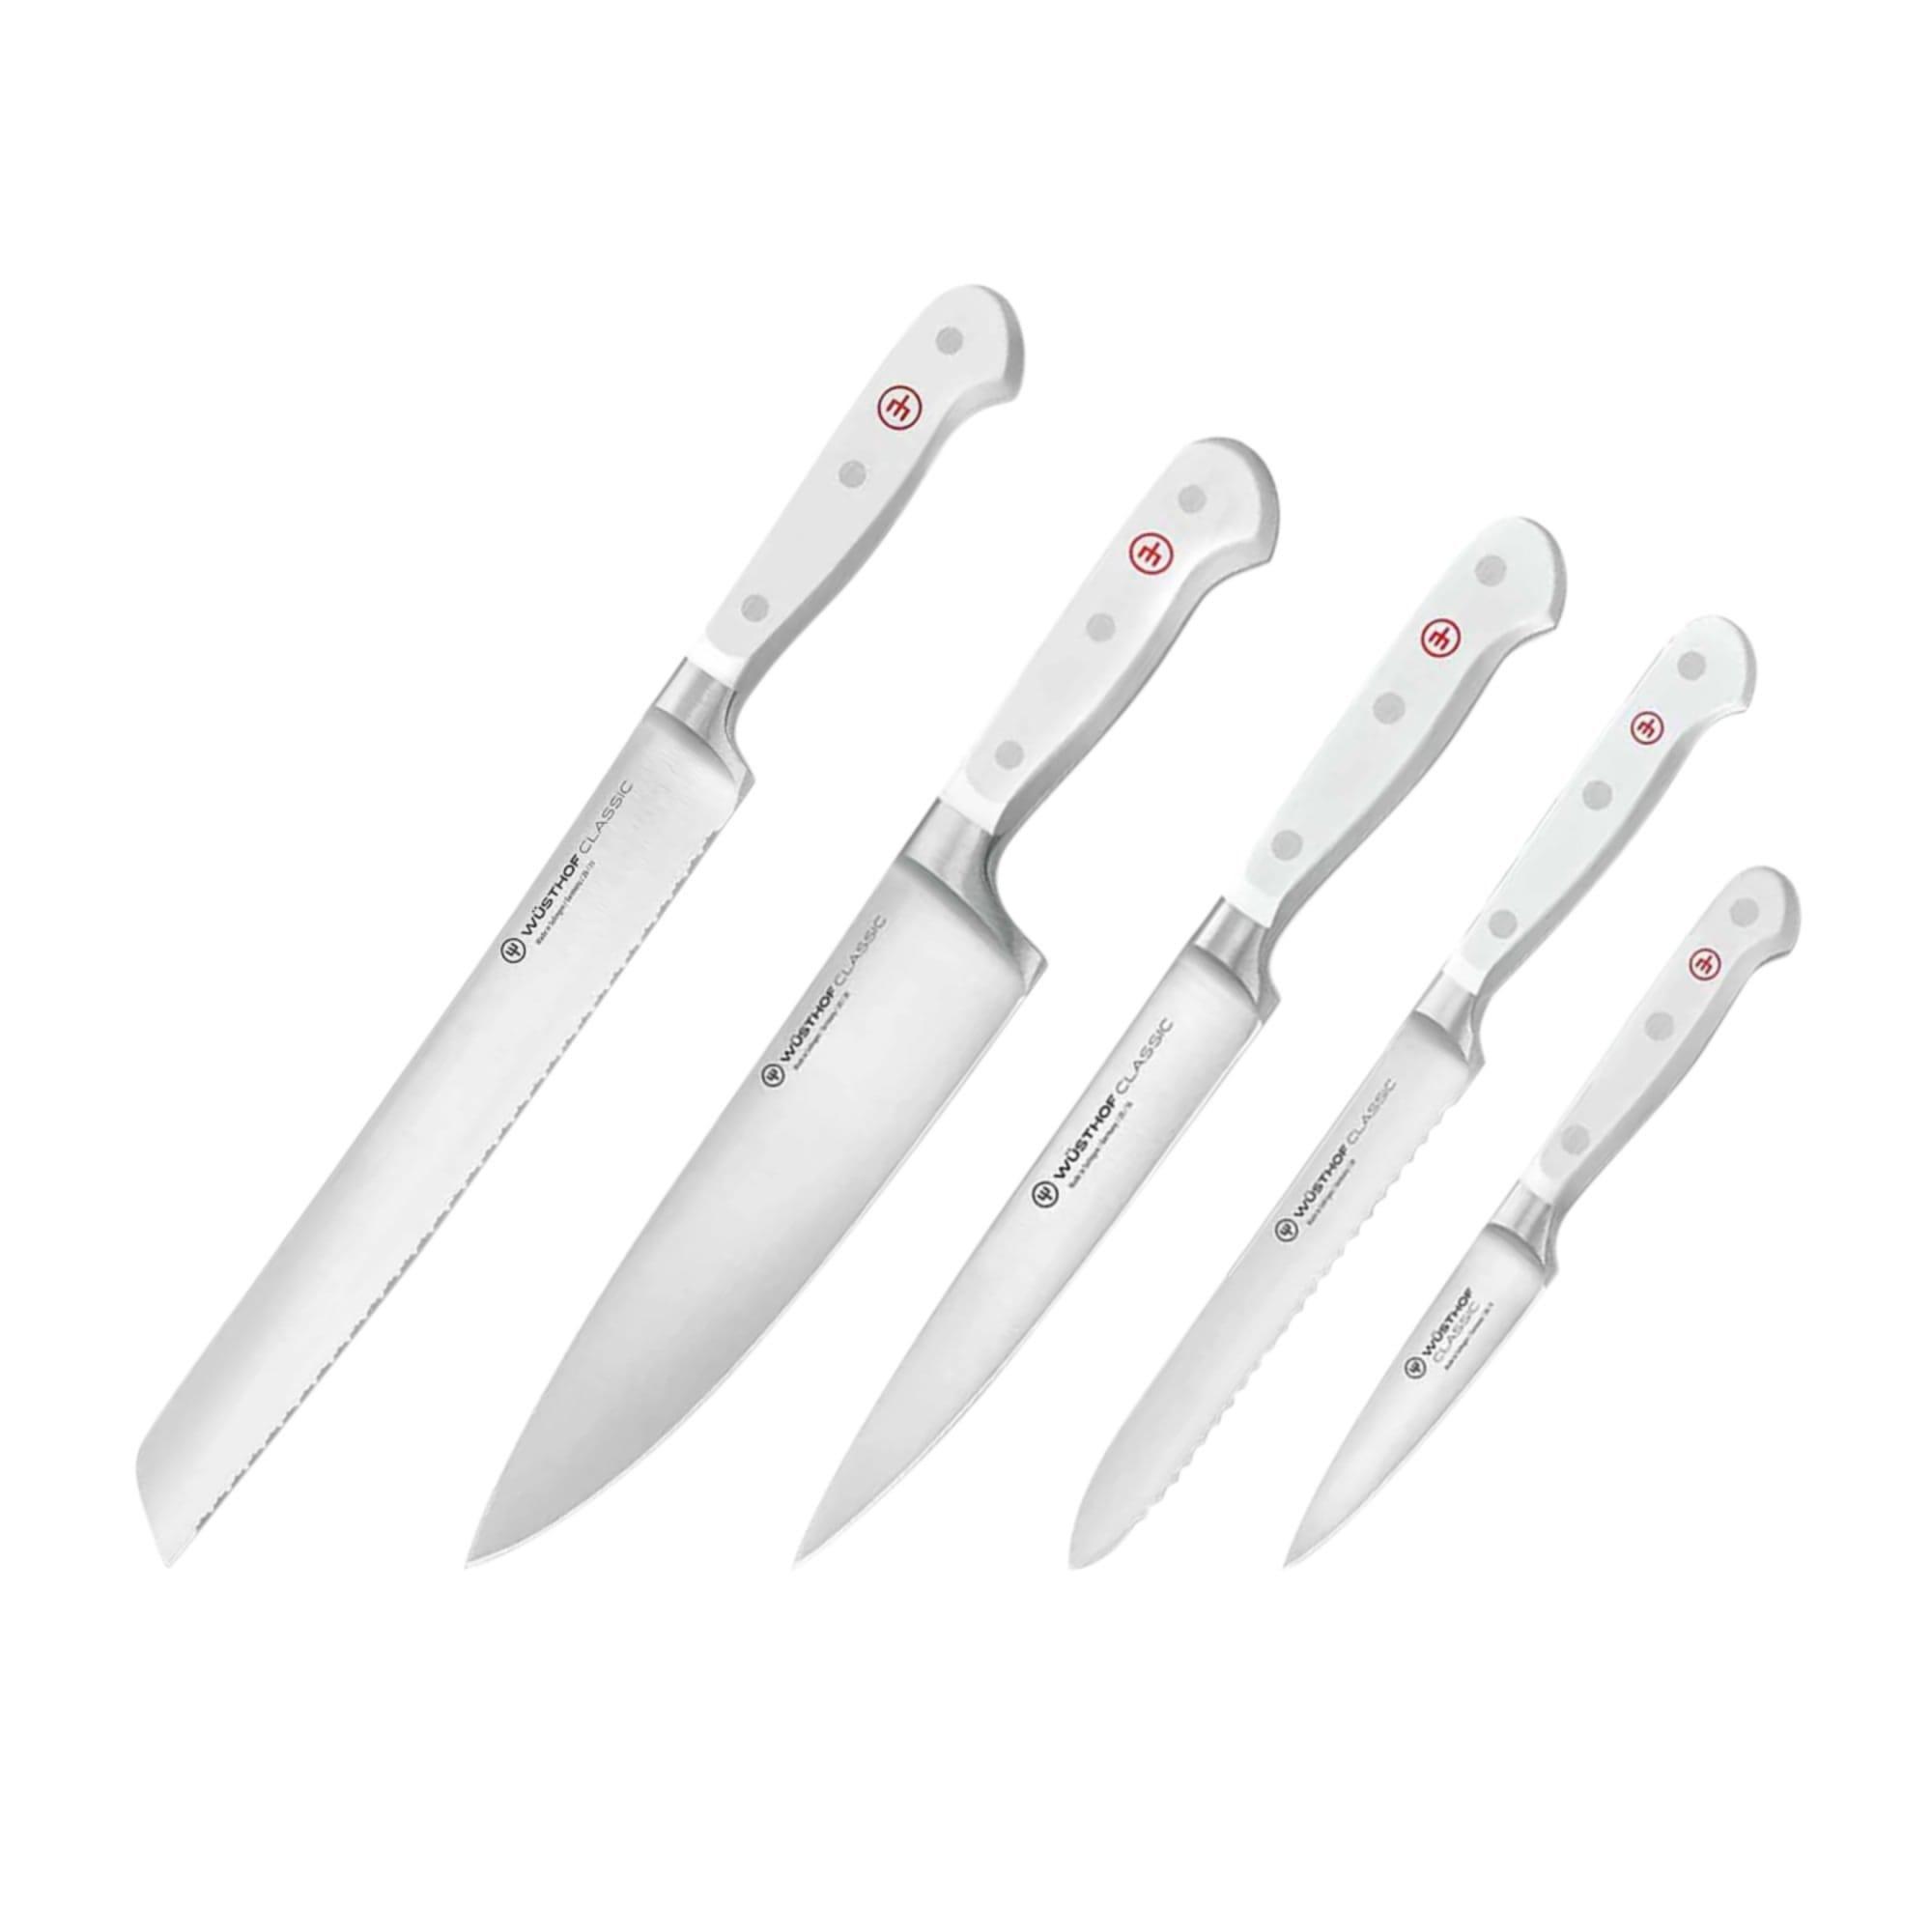 Wusthof Classic White 6pc Design Knife Block Set with Bread Knife Image 3